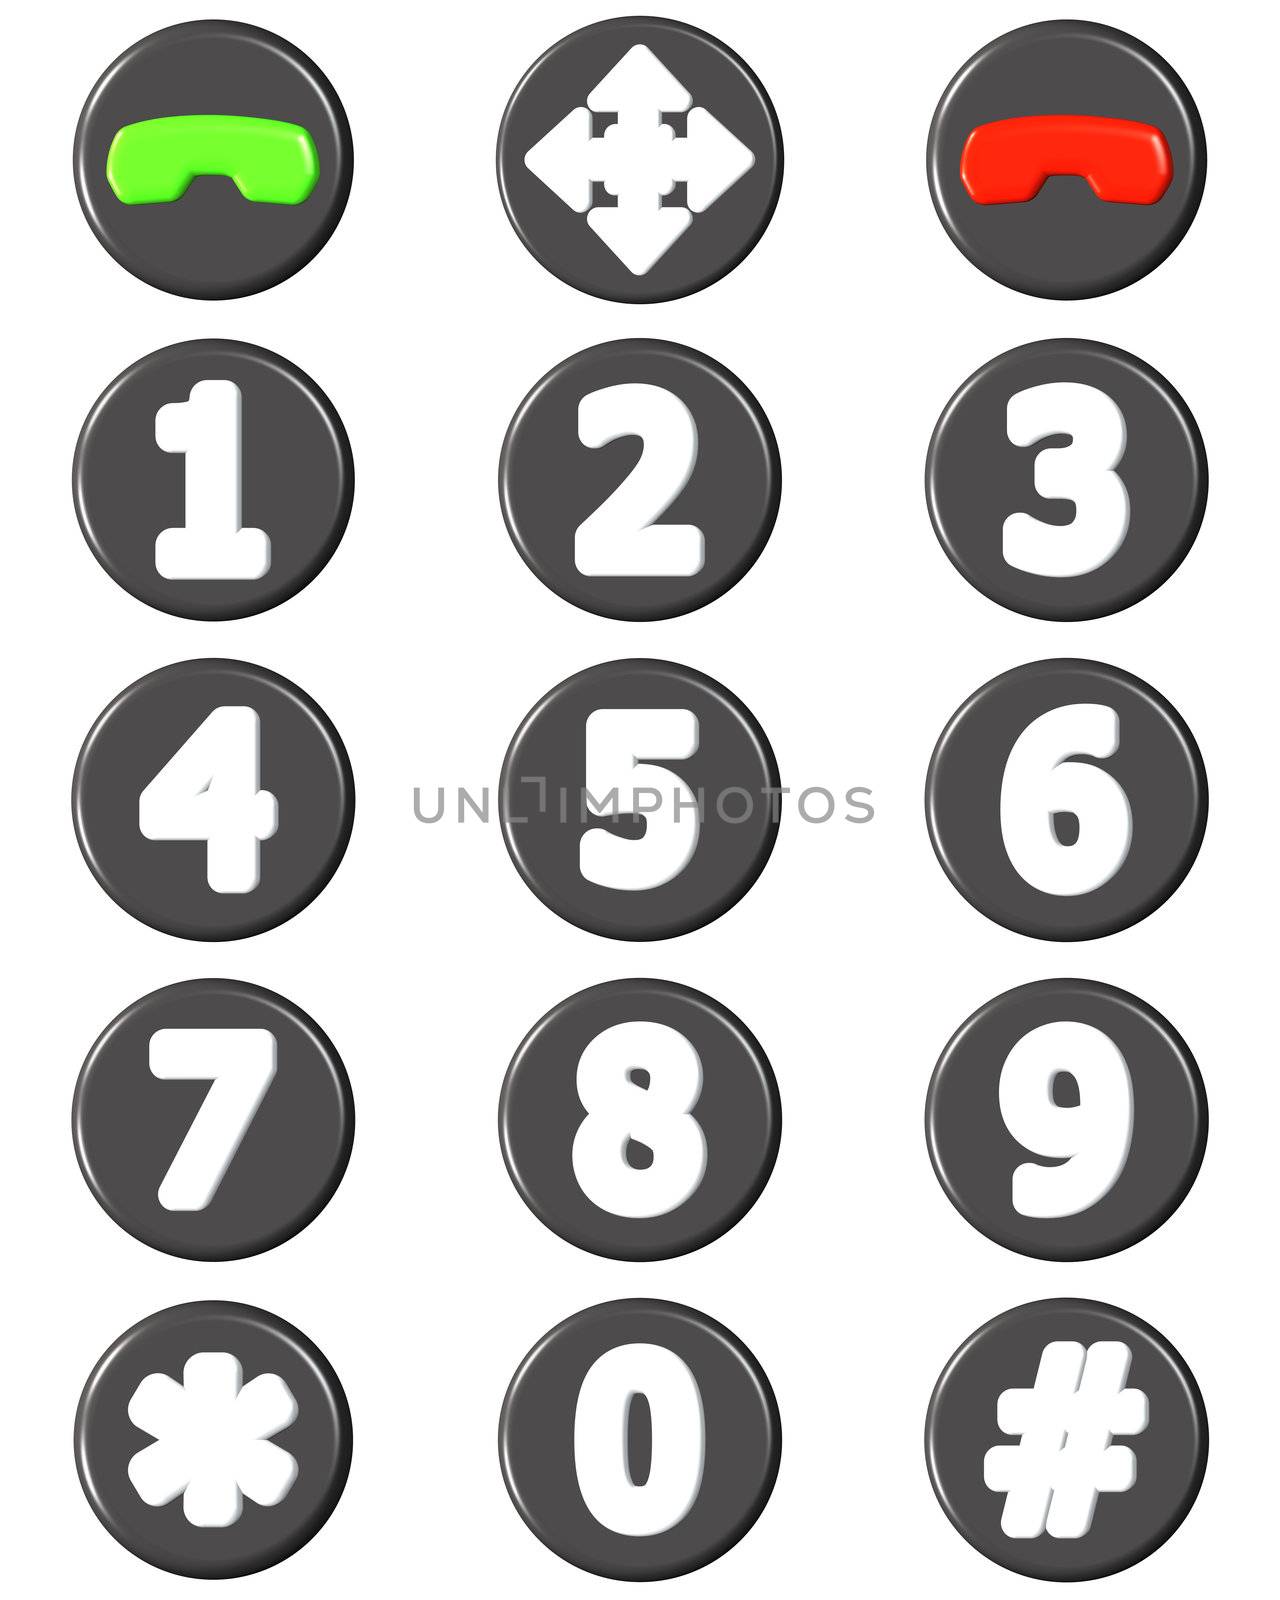 phone button set by walex101